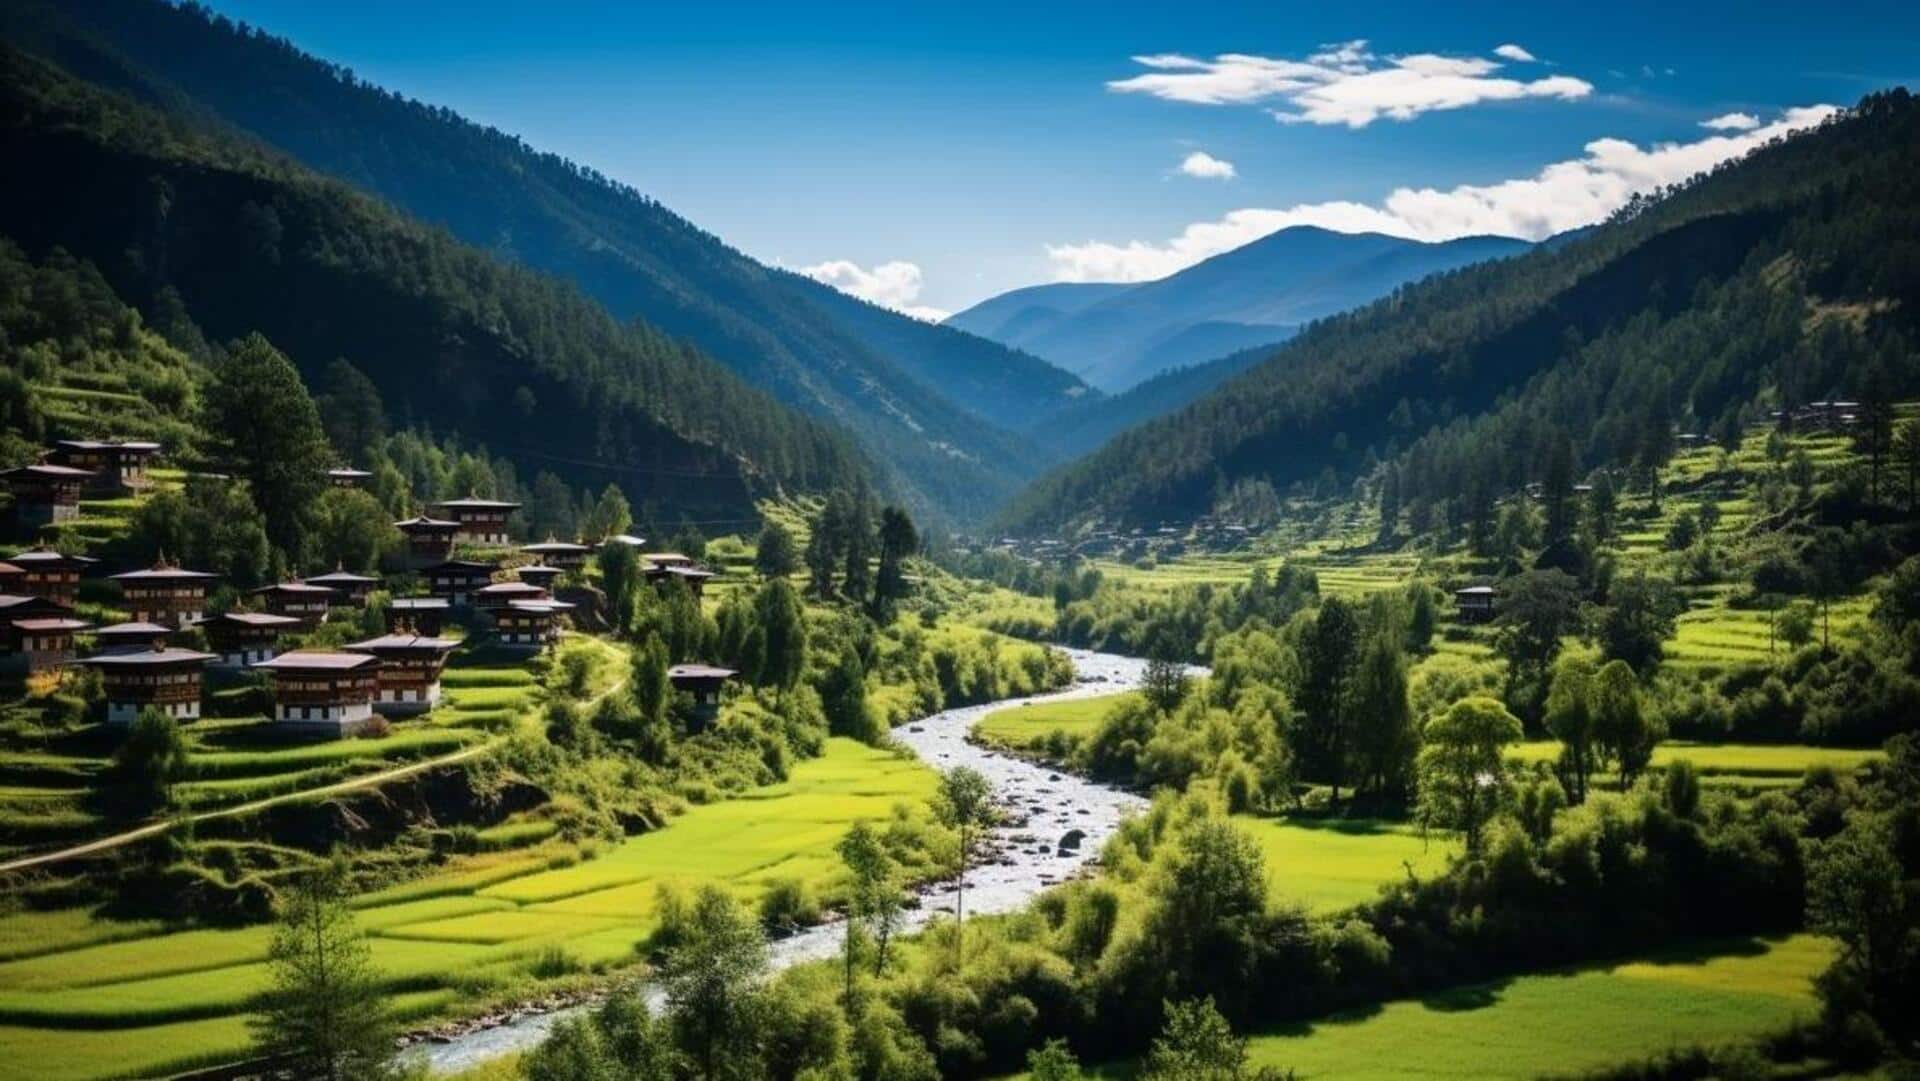 Trek to Bhutan's majestic Tiger's Nest Monastery